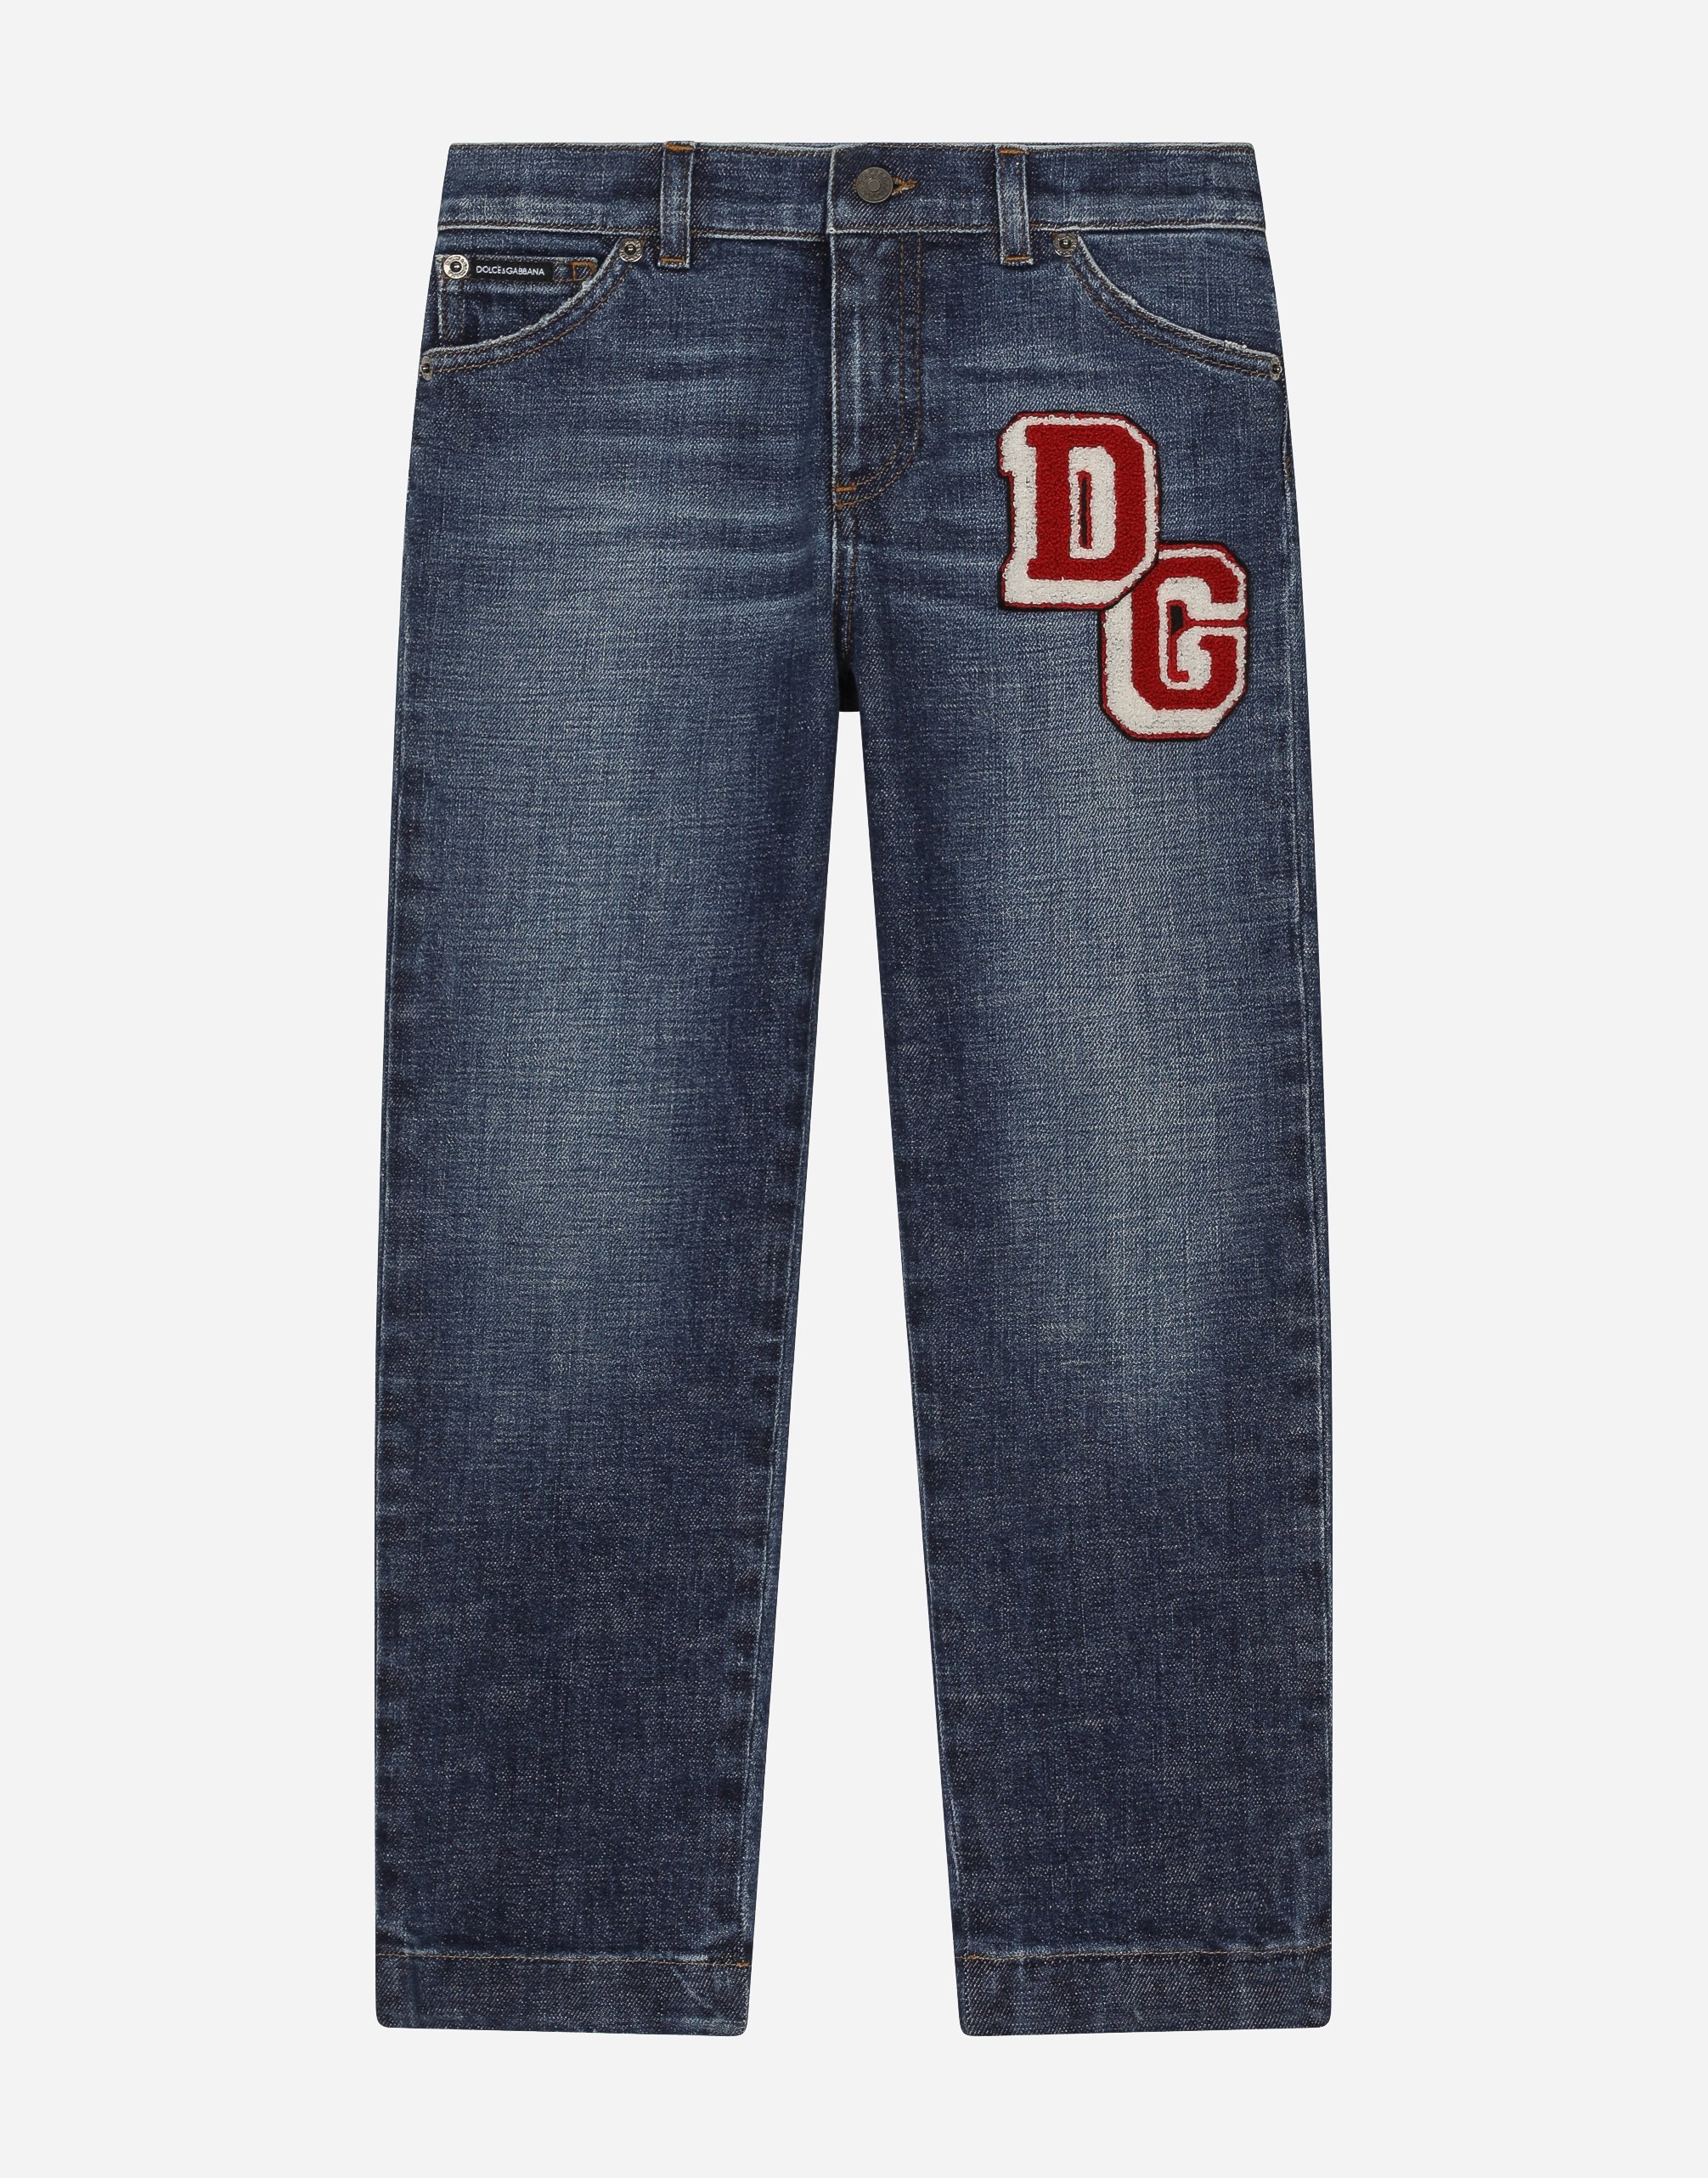 Dolce & Gabbana 5-pocket Denim Jeans With Dg Patch In Blue